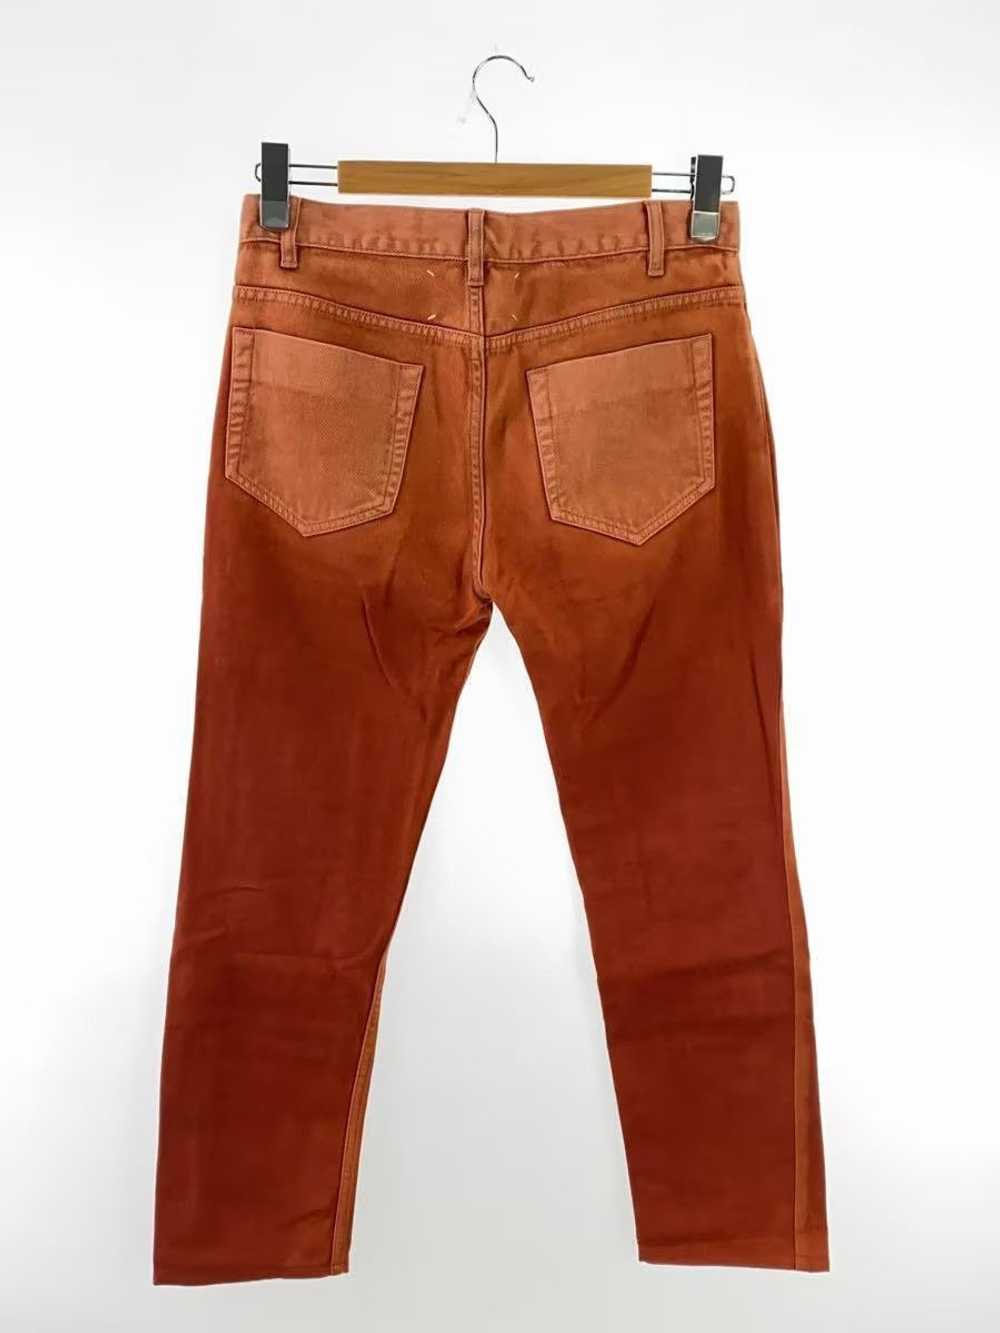 Maison Margiela Faded Two Tone Denim Jeans - image 2